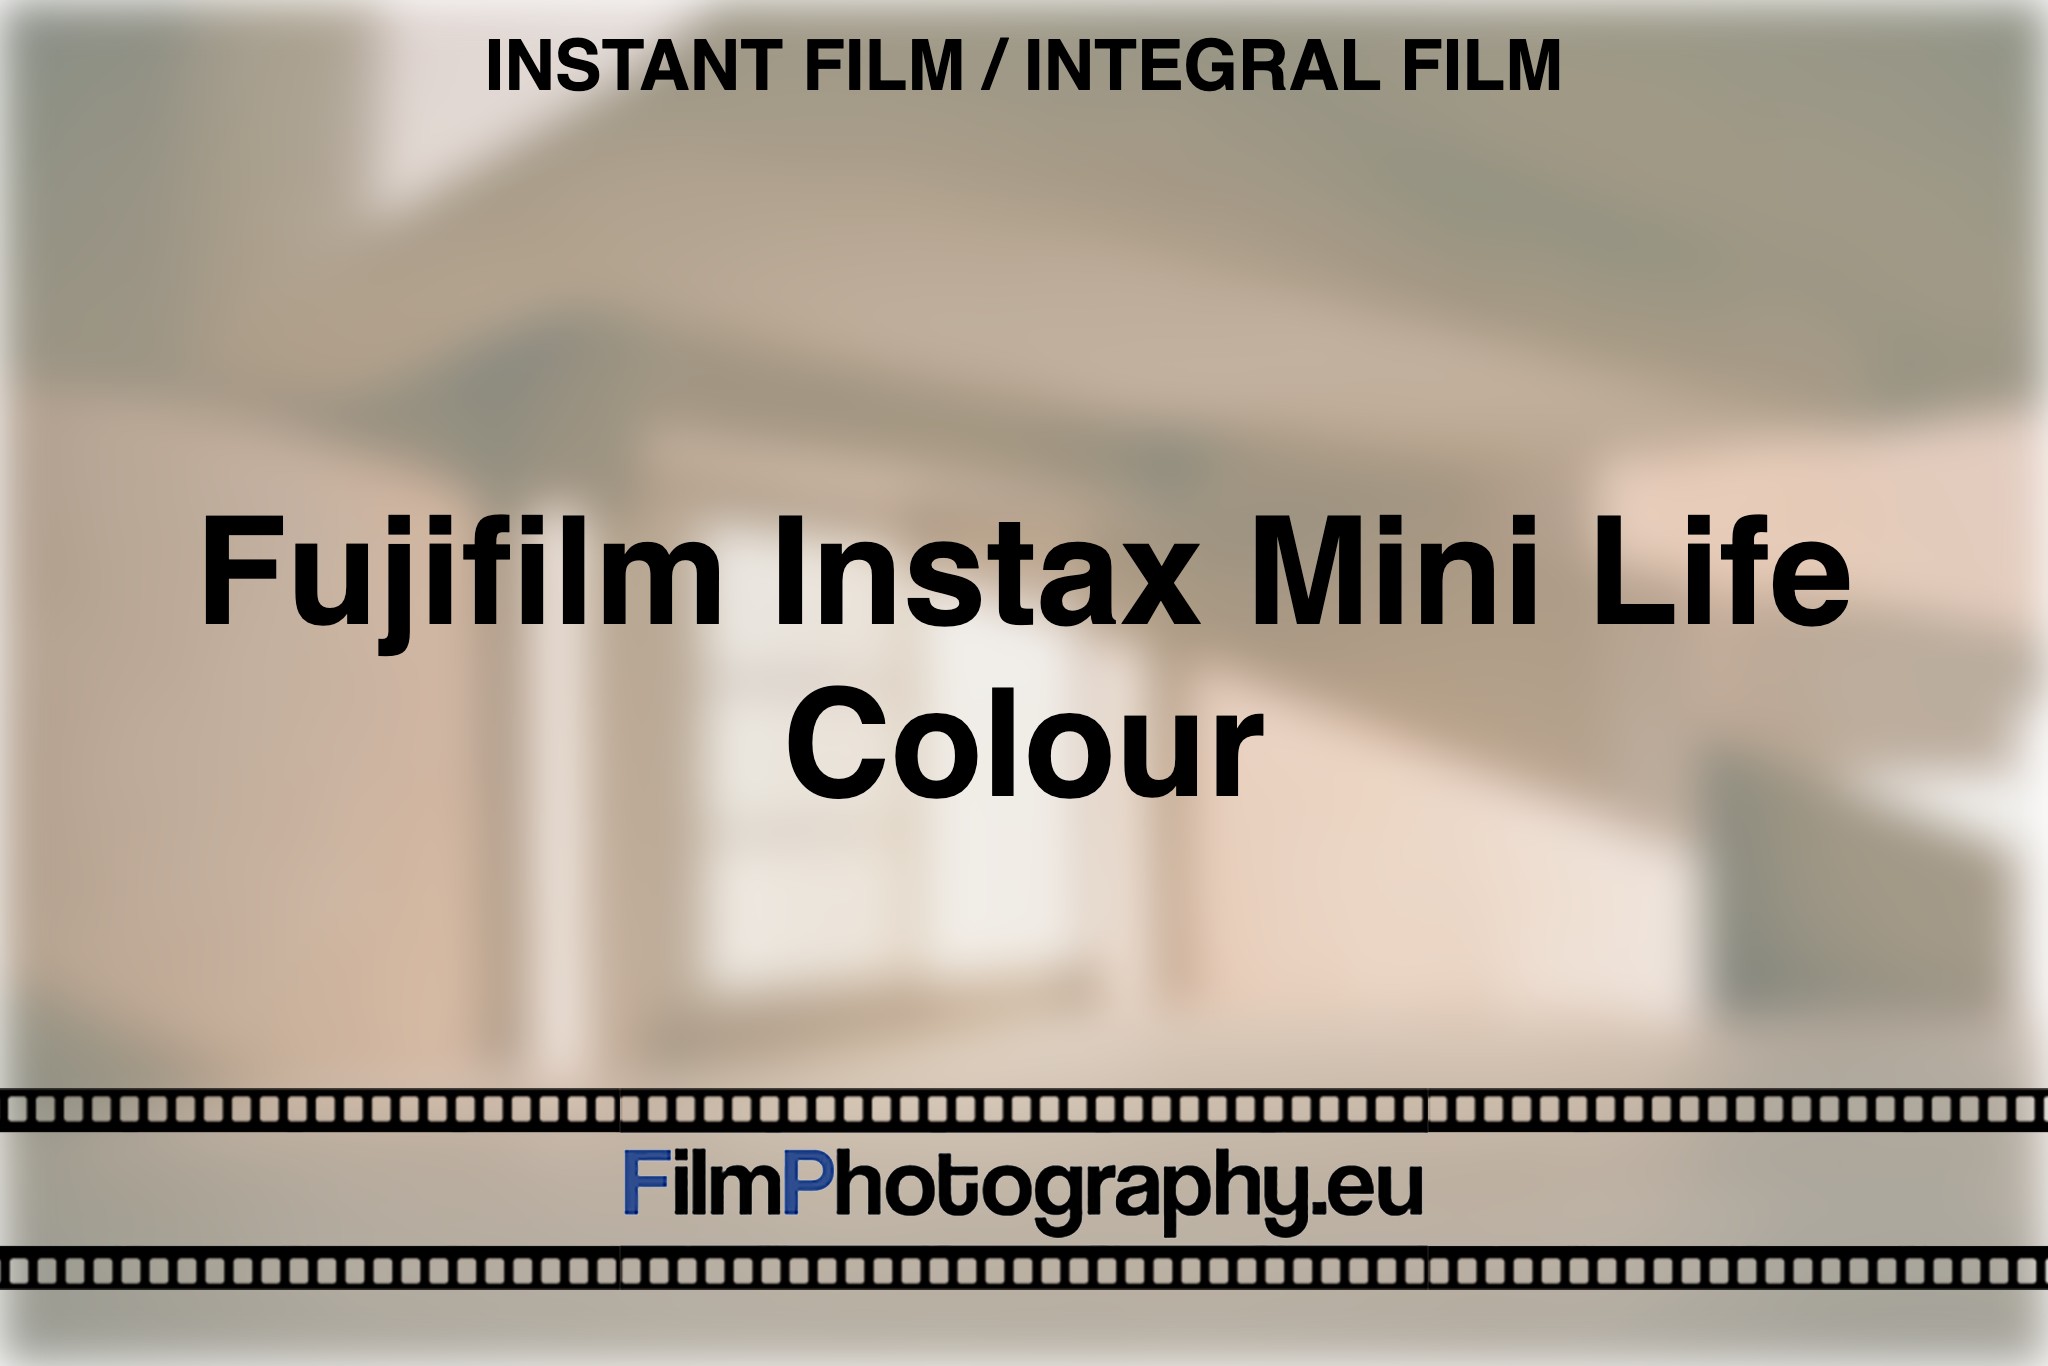 fujifilm-instax-mini-life-colour-instant-film-integral-film-bnv